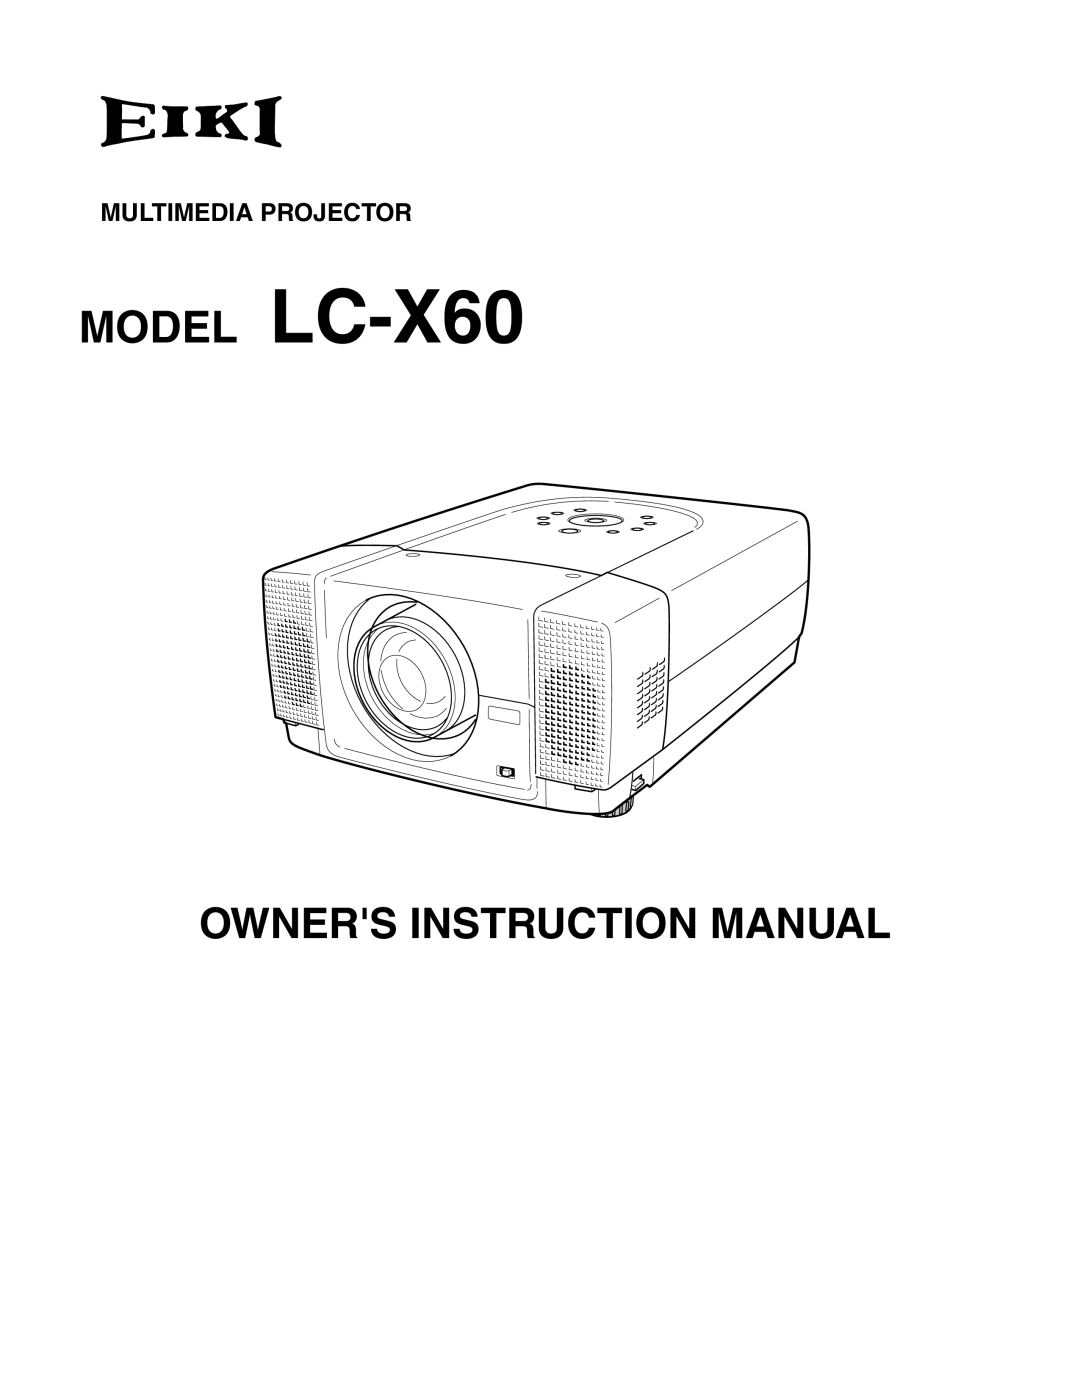 Eiki instruction manual Multimedia Projector, MODEL LC-X60 